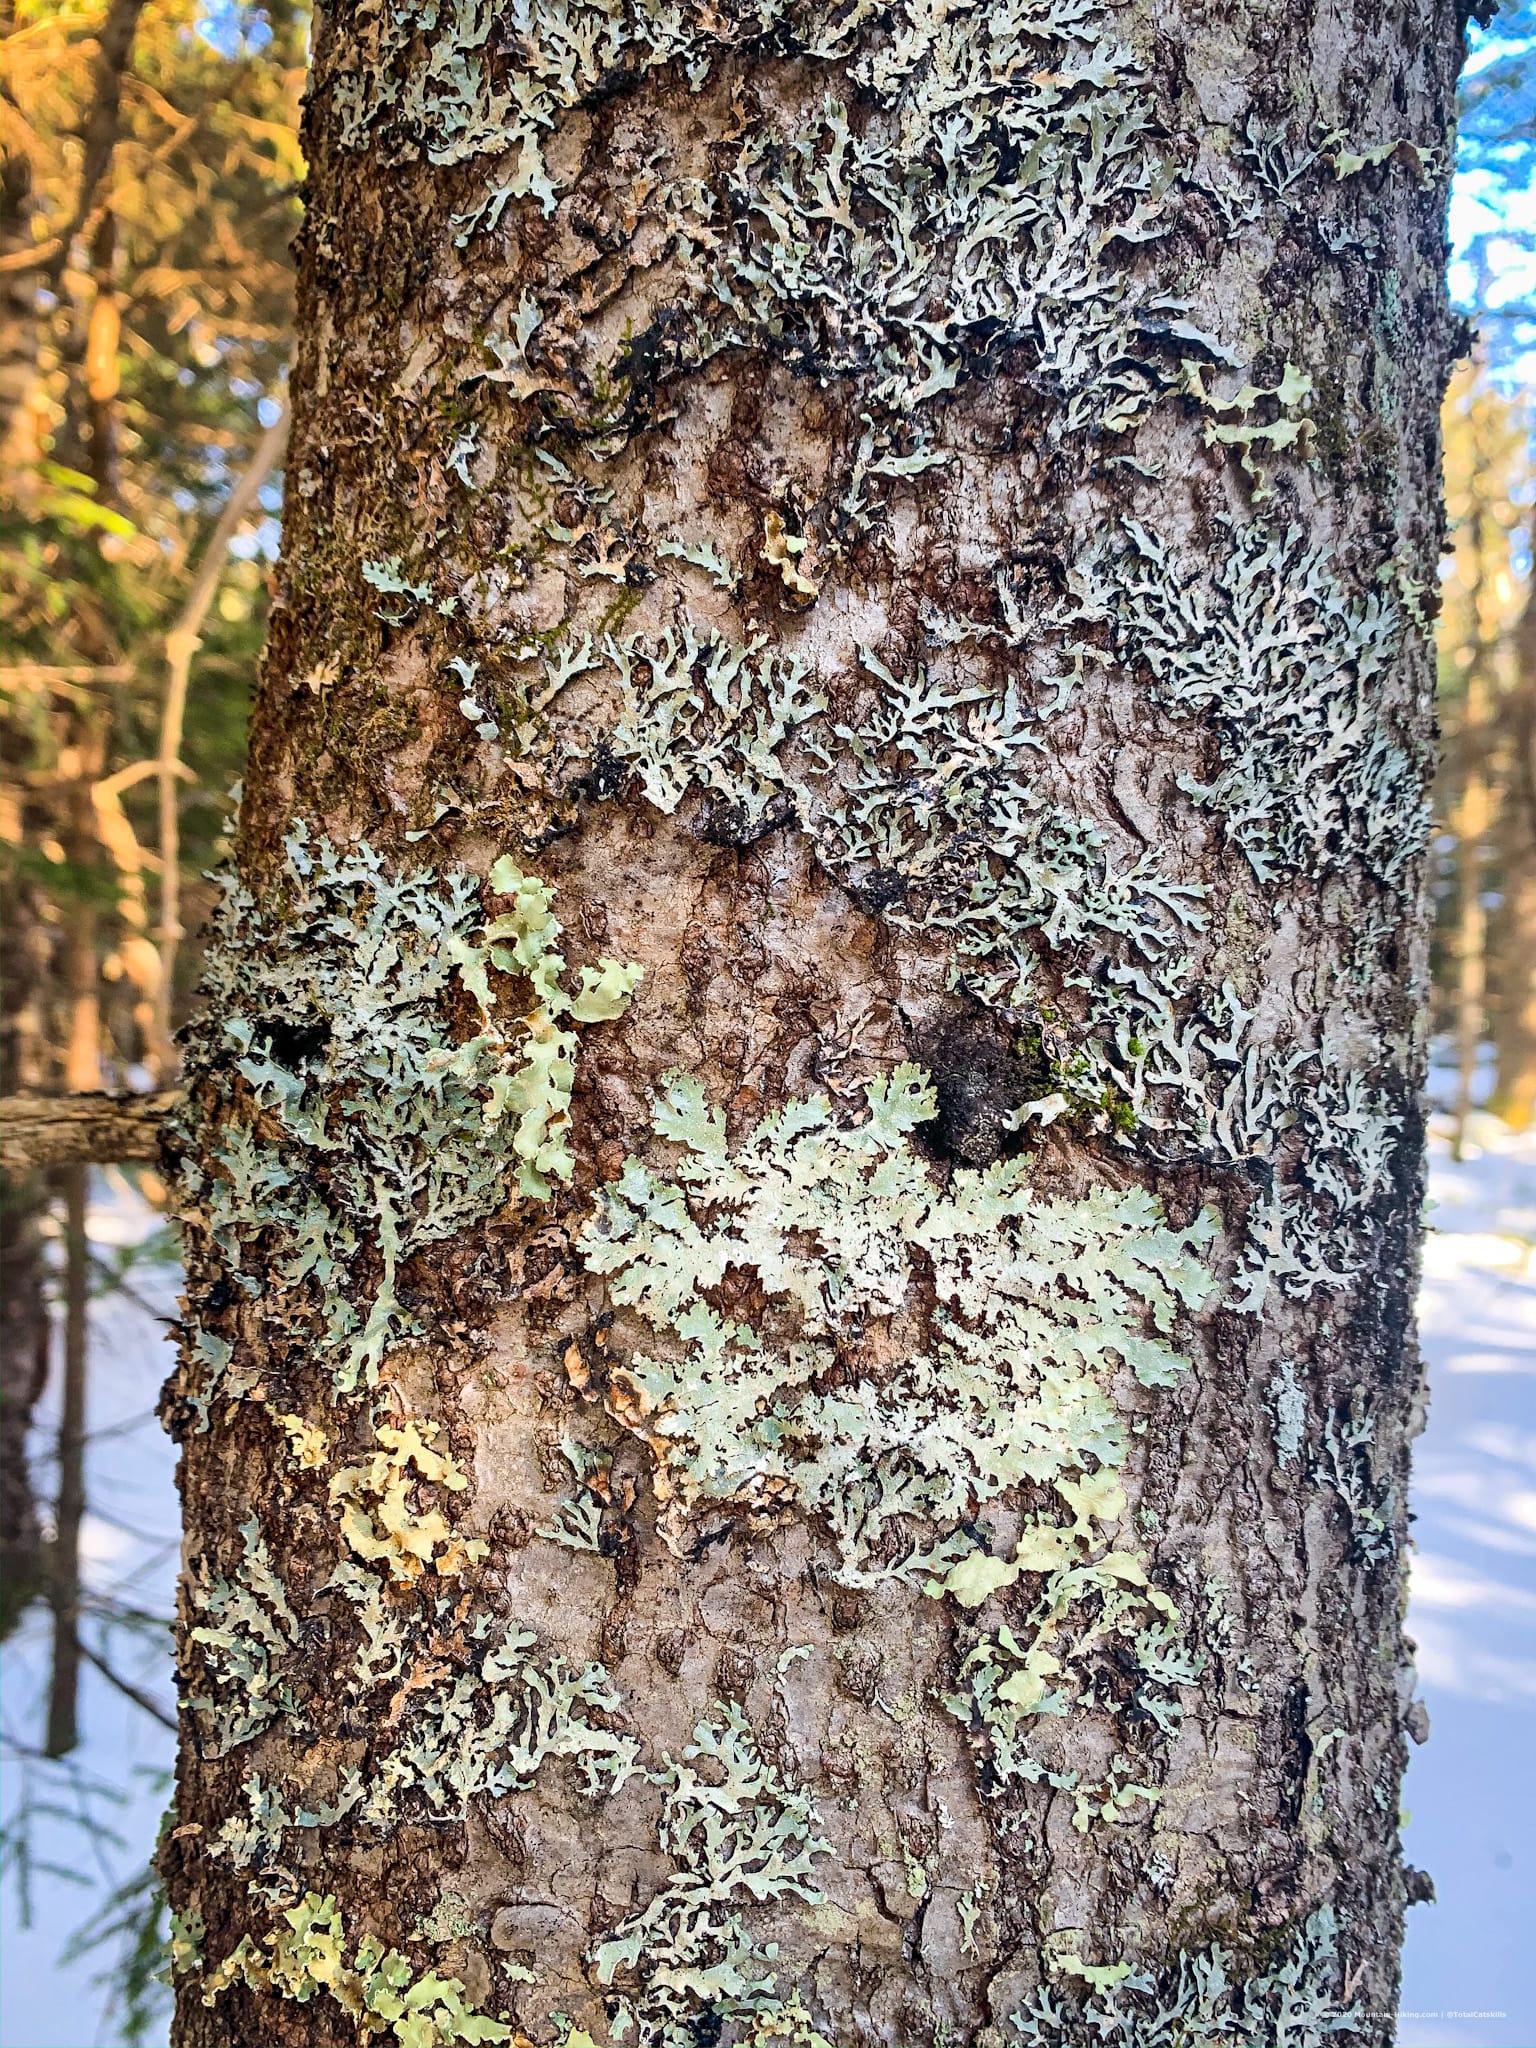 lichens on tree trunk